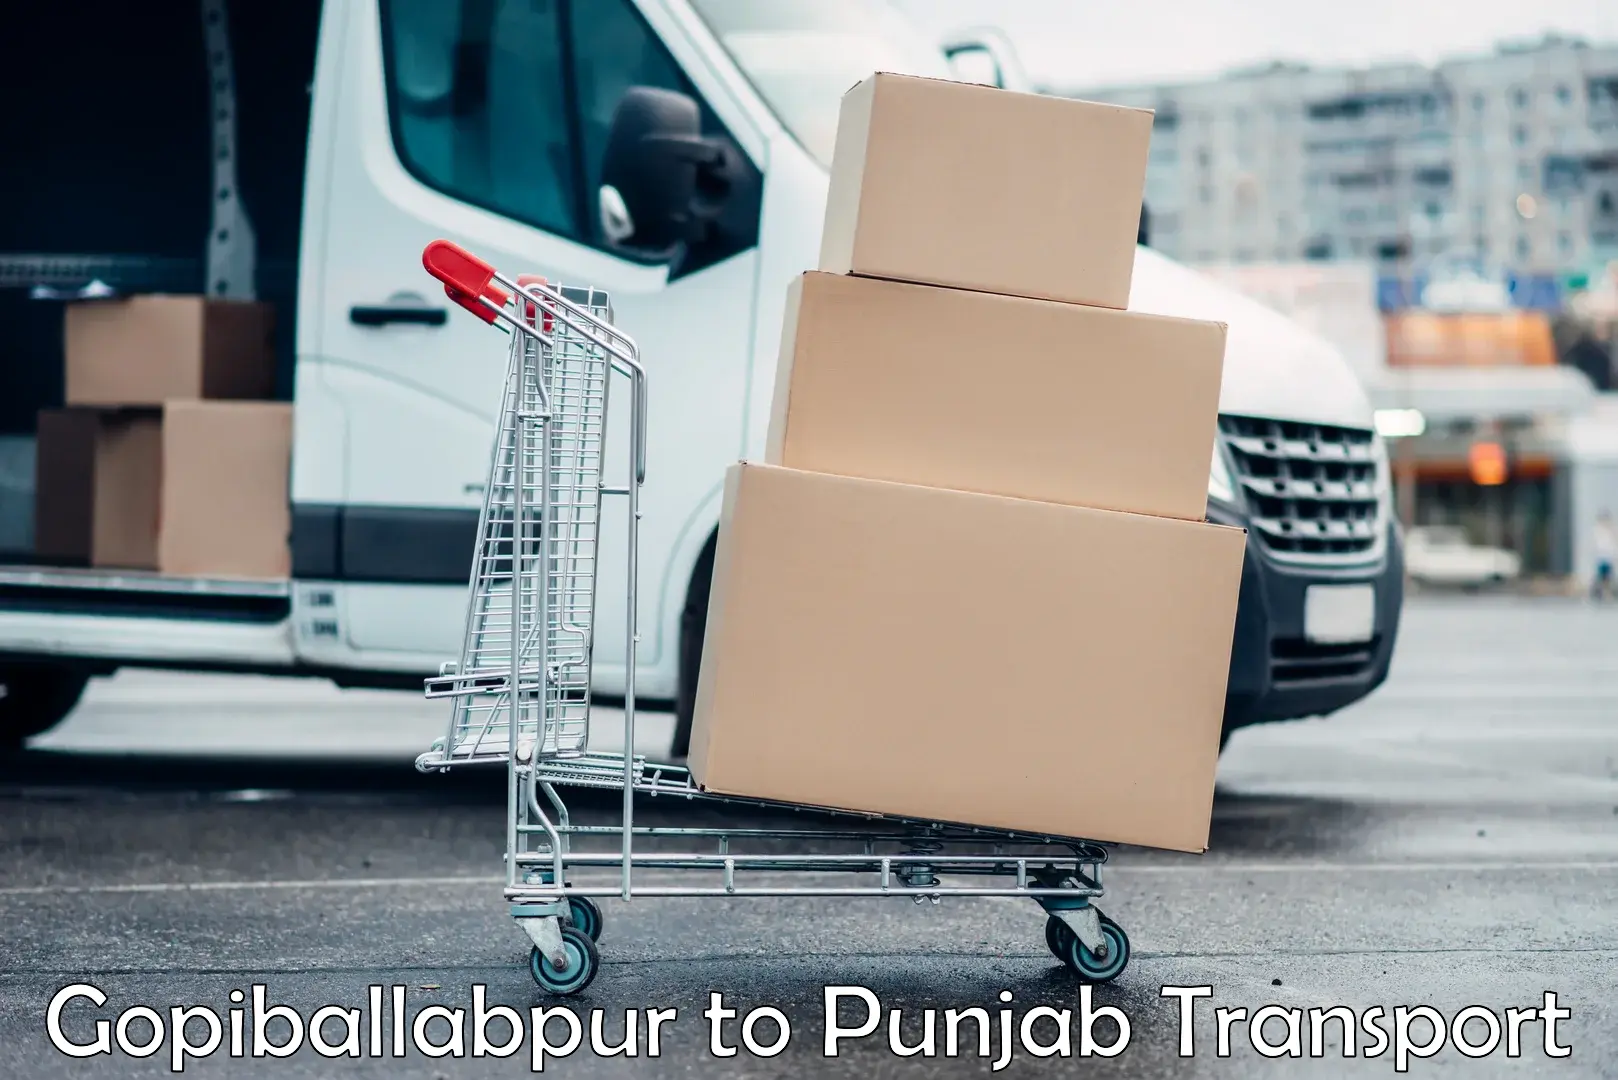 Furniture transport service Gopiballabpur to Kotkapura